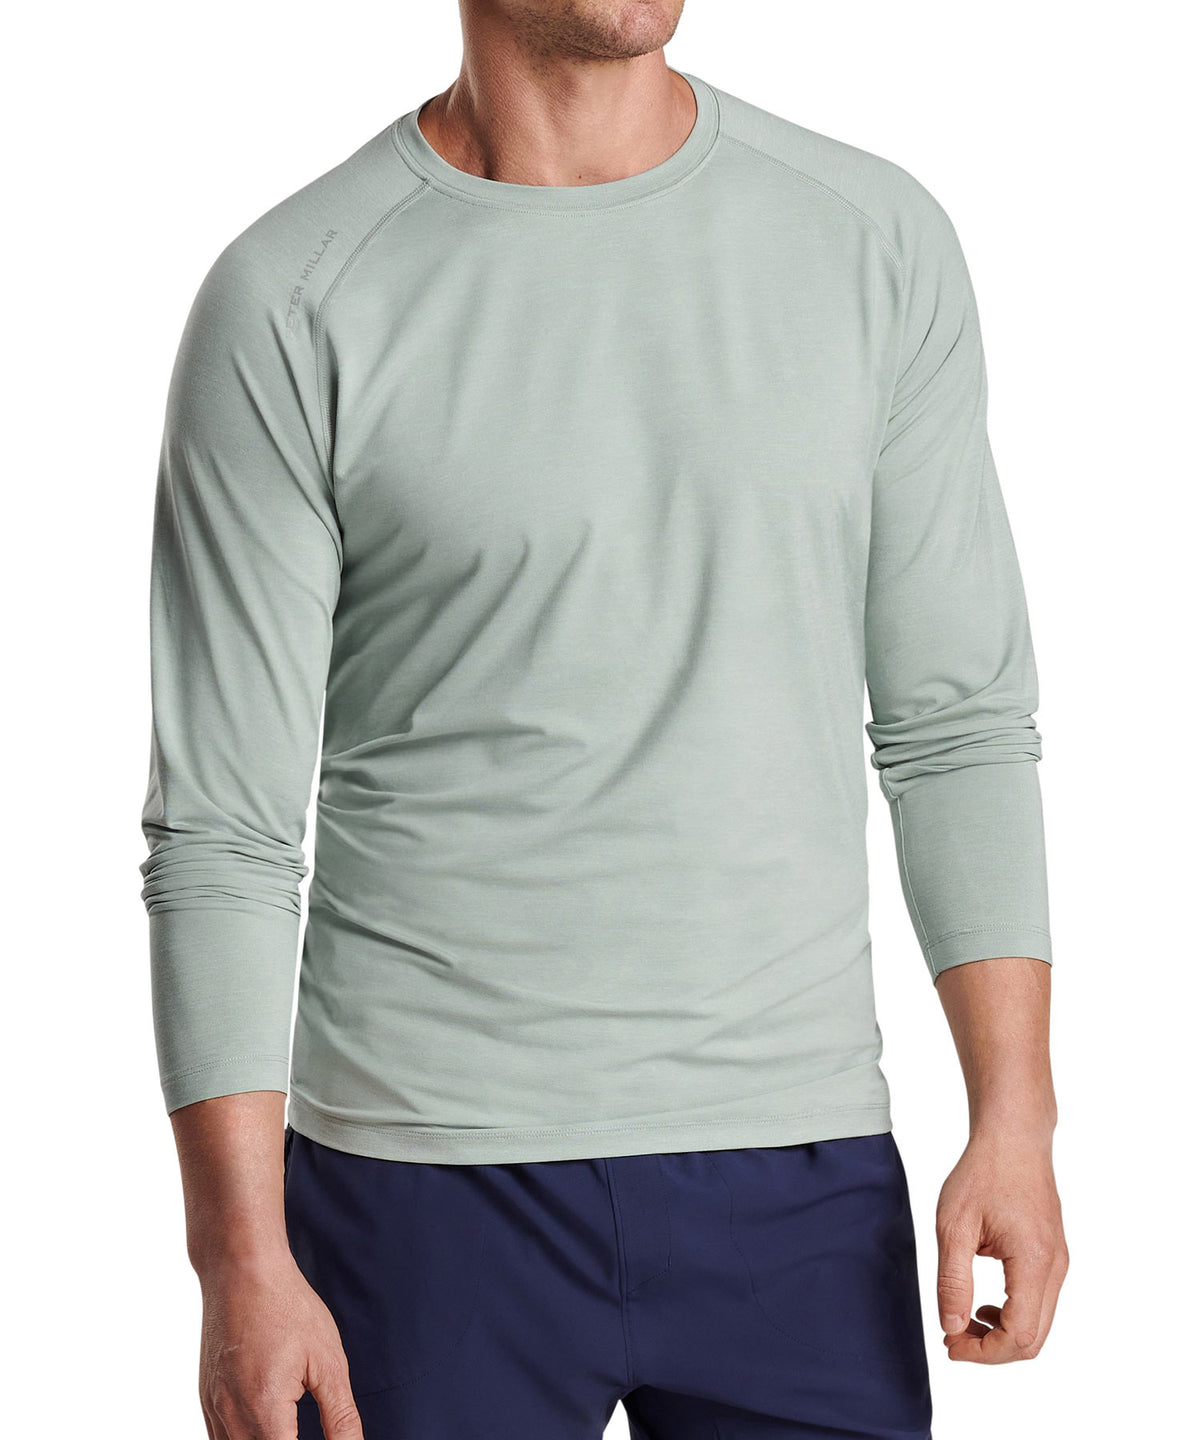 Peter Millar Long Sleeve Aurora Stretch Performance T-Shirt, Men's Big & Tall